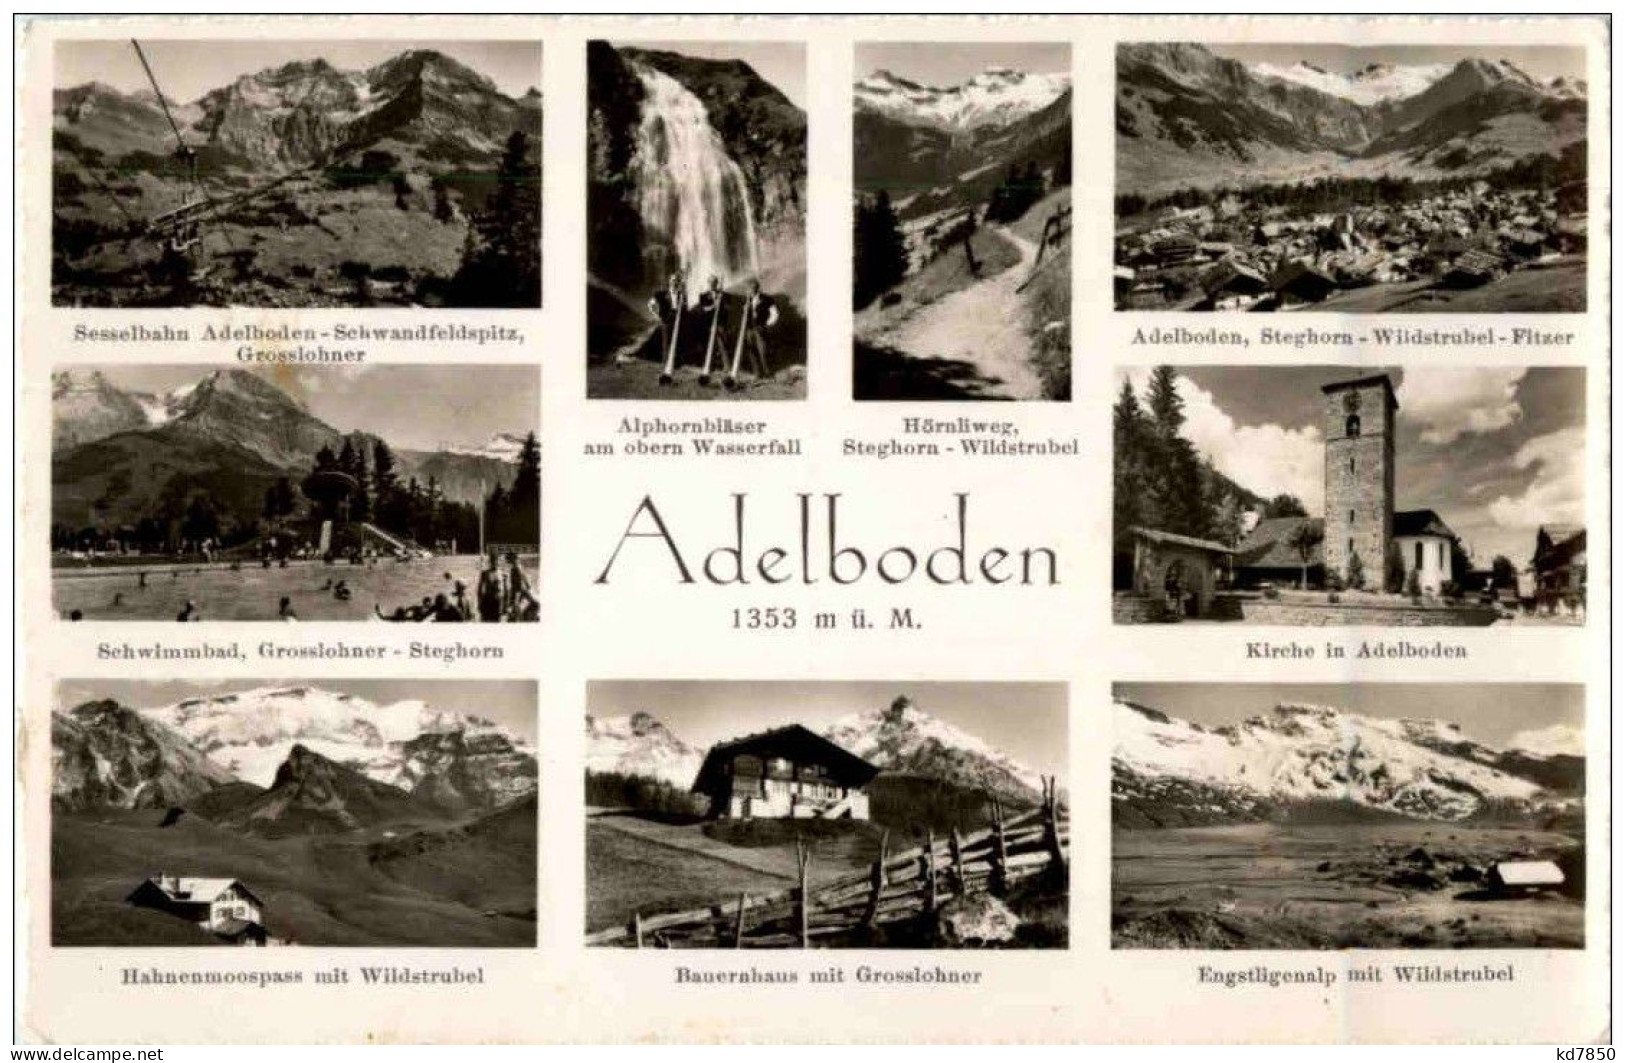 Adelboden - Adelboden